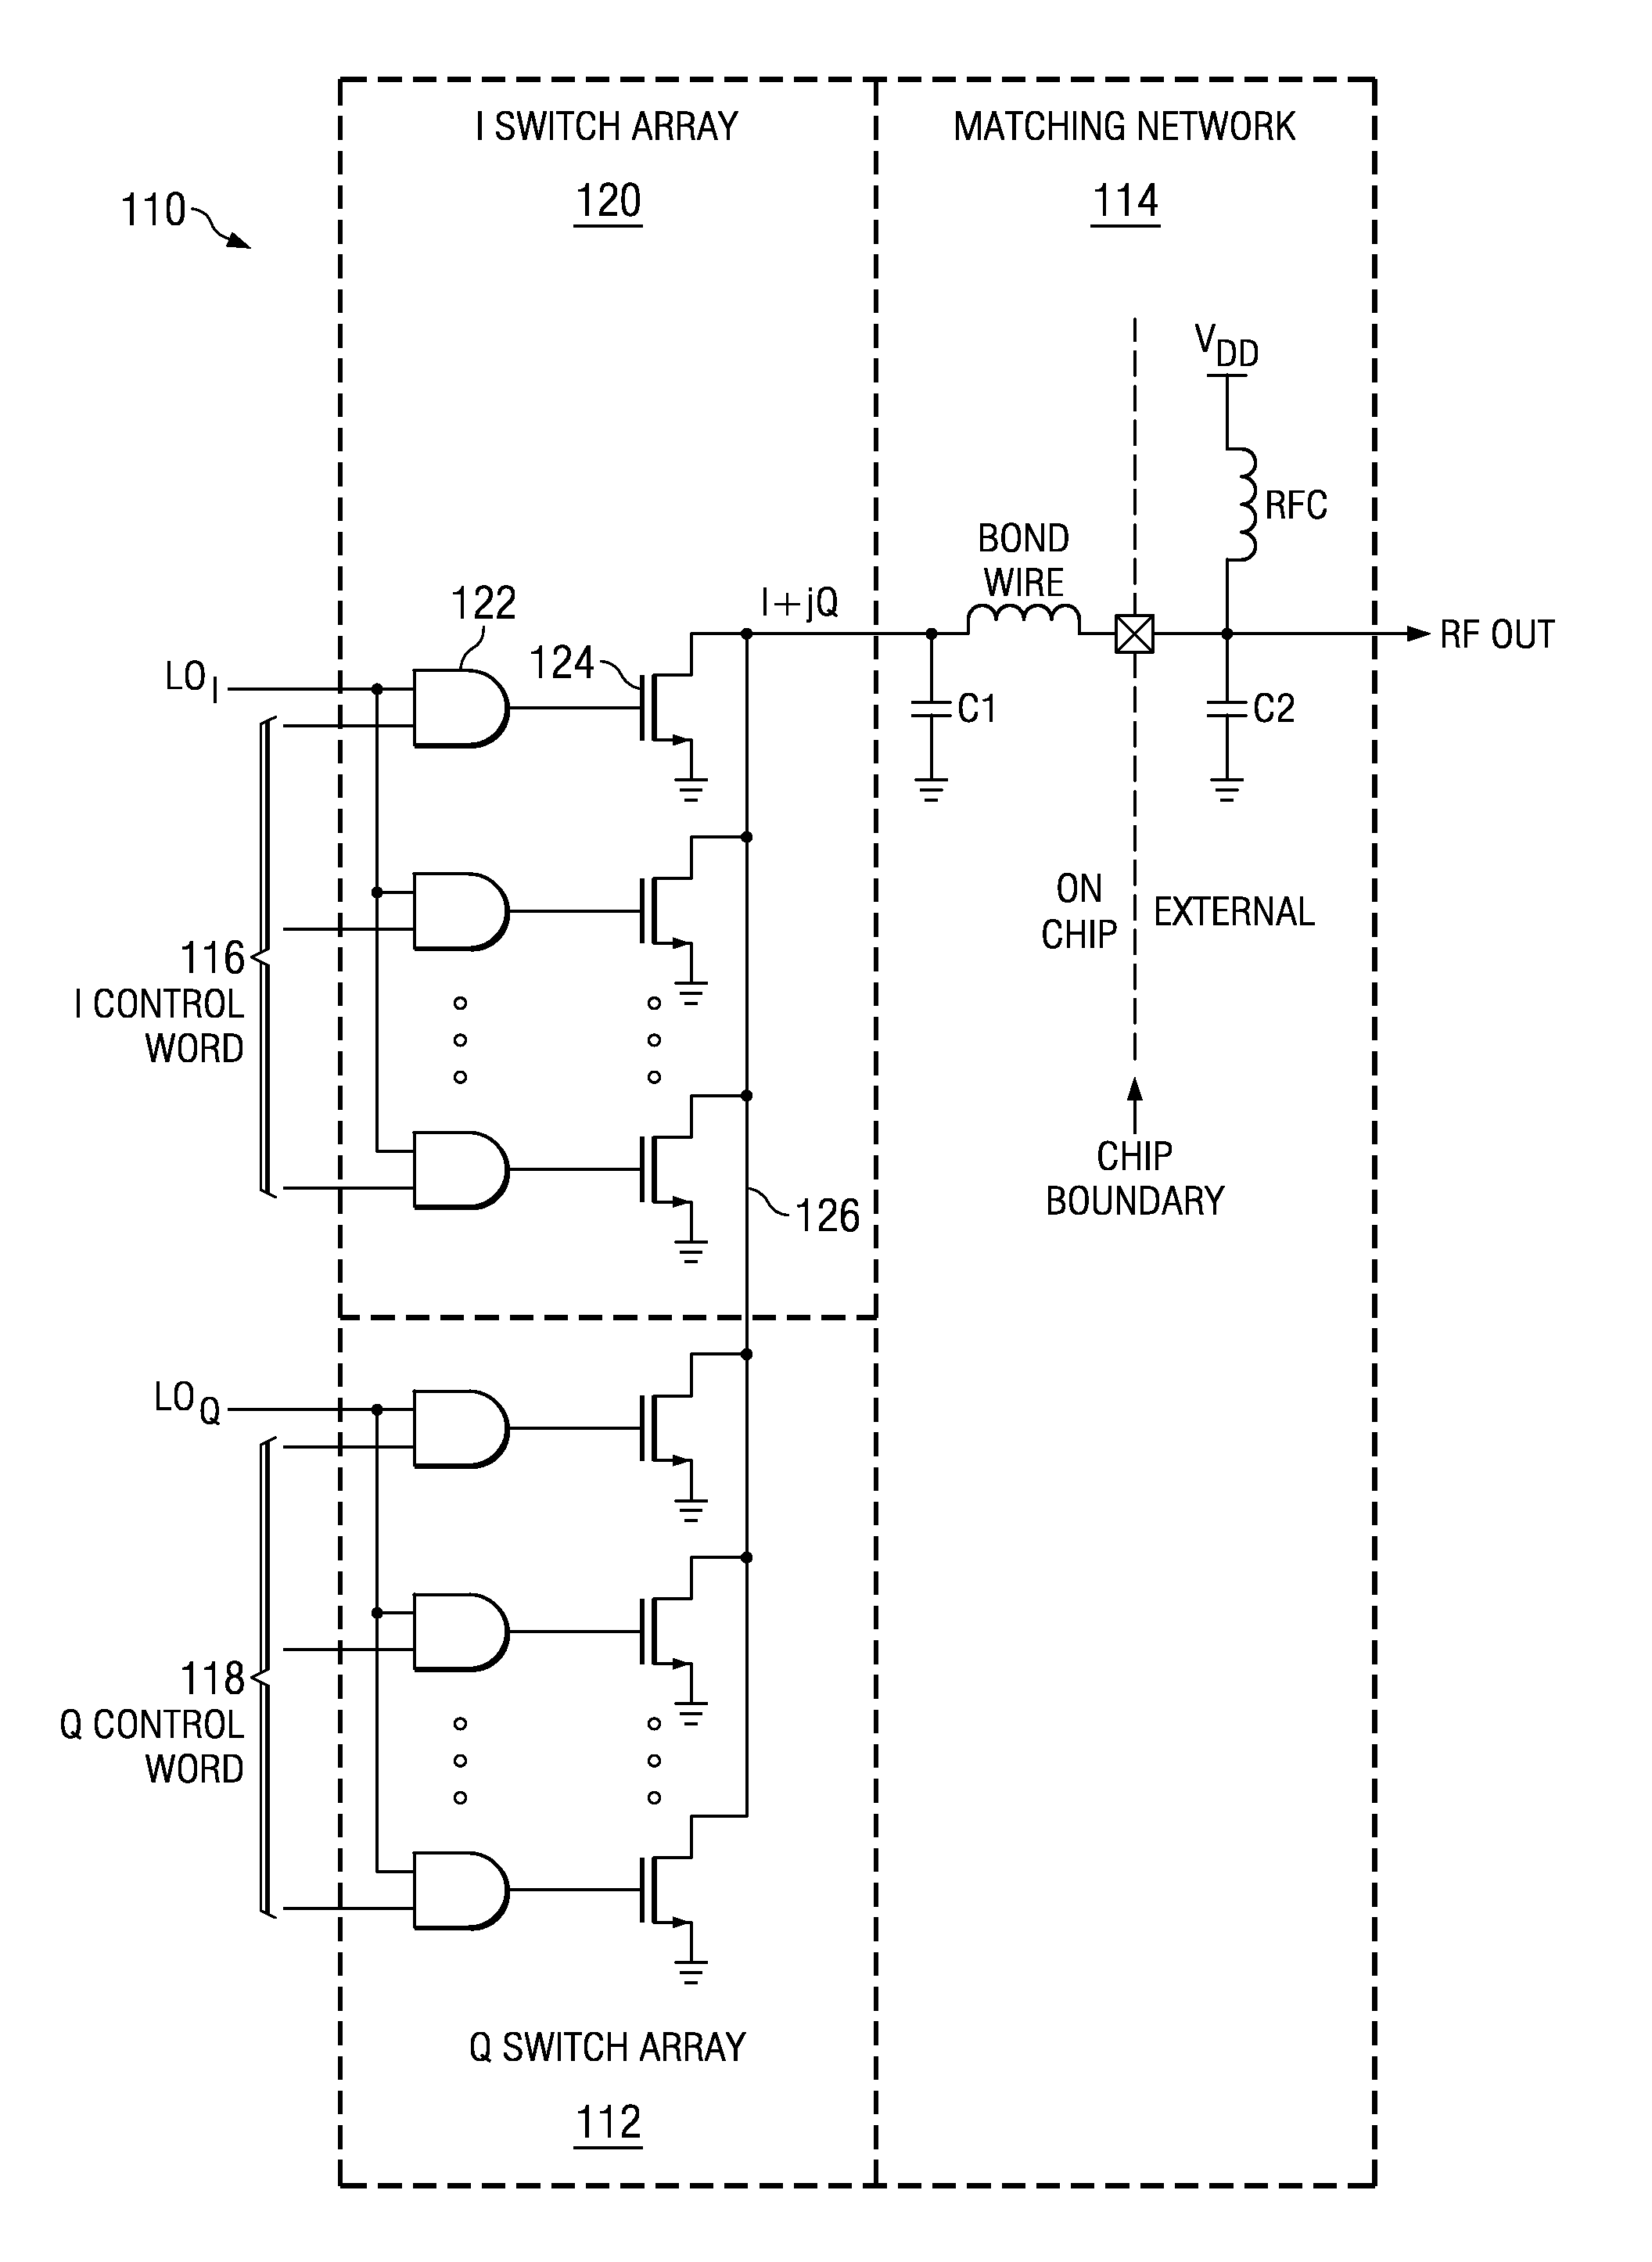 Method and apparatus for a fully digital quadrature modulator